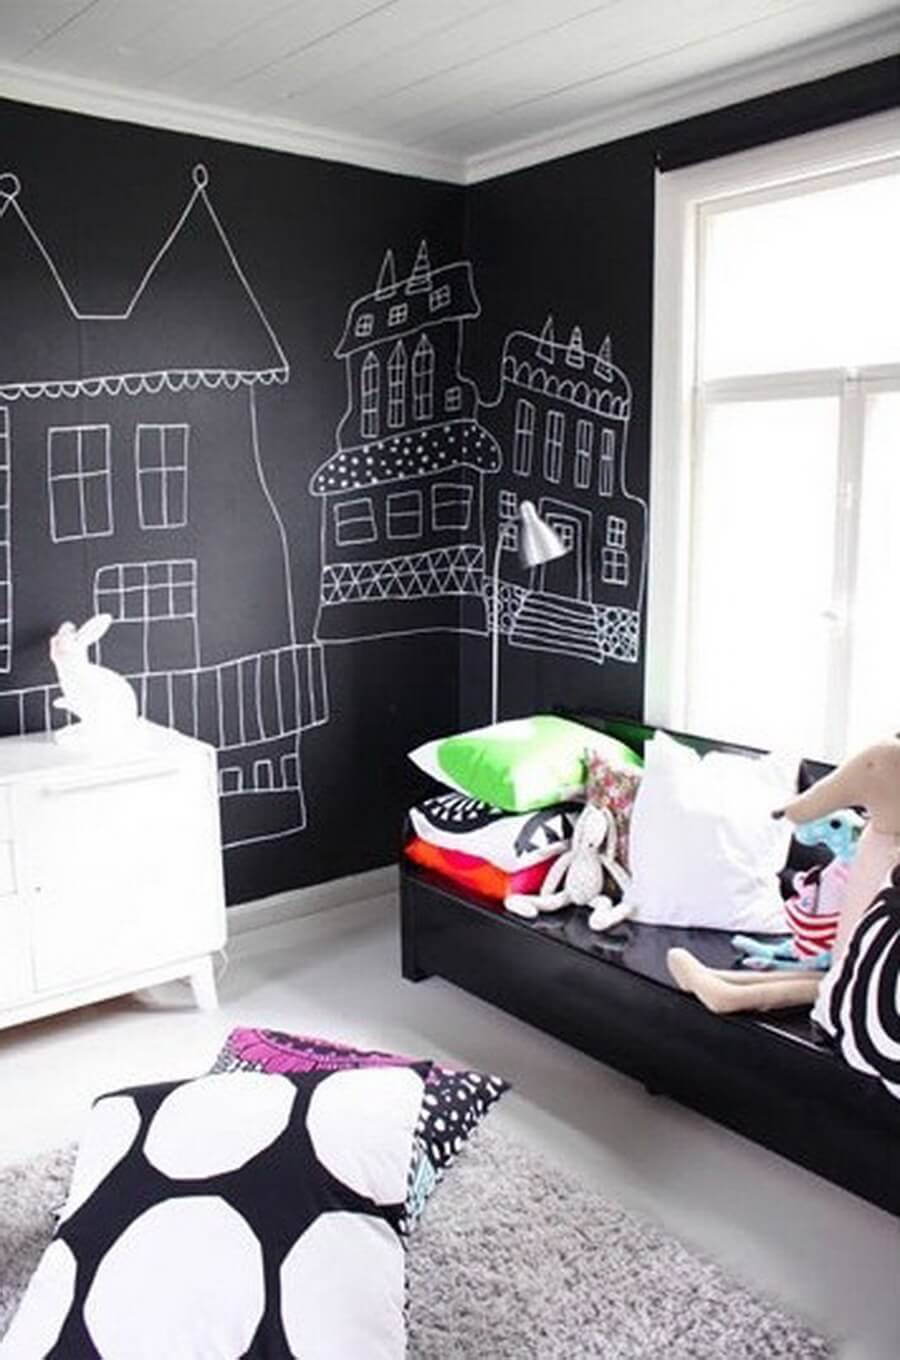 Chalkboard Paint Ideas Bedroom
 15 Amazing Black and White Interior Design Ideas s